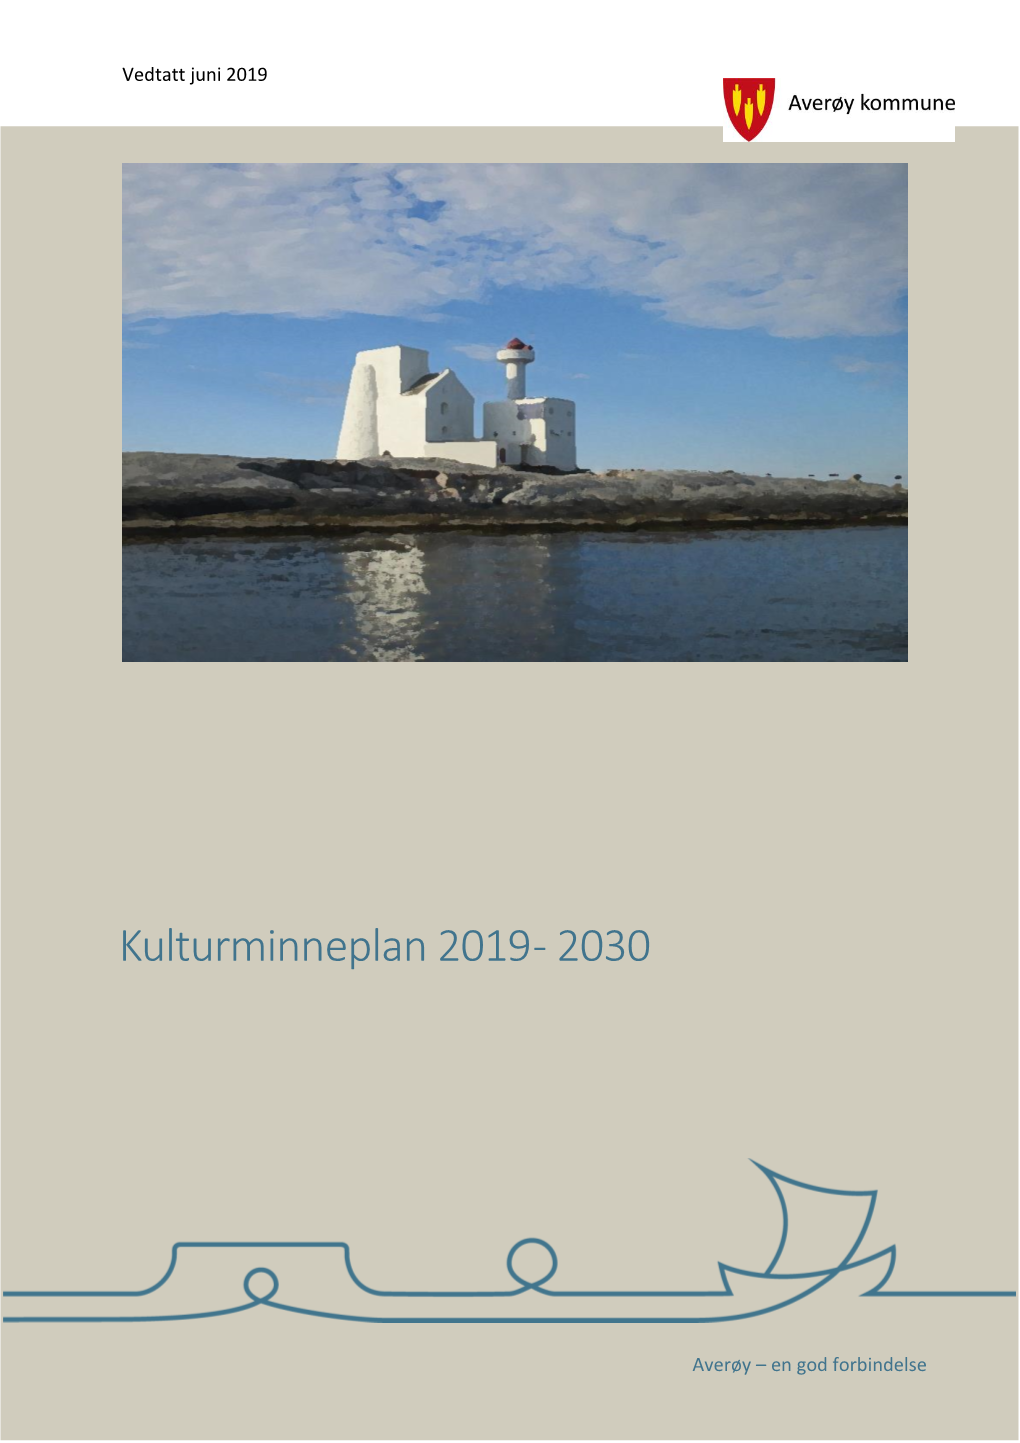 Kulturminneplan for Averøy 2019